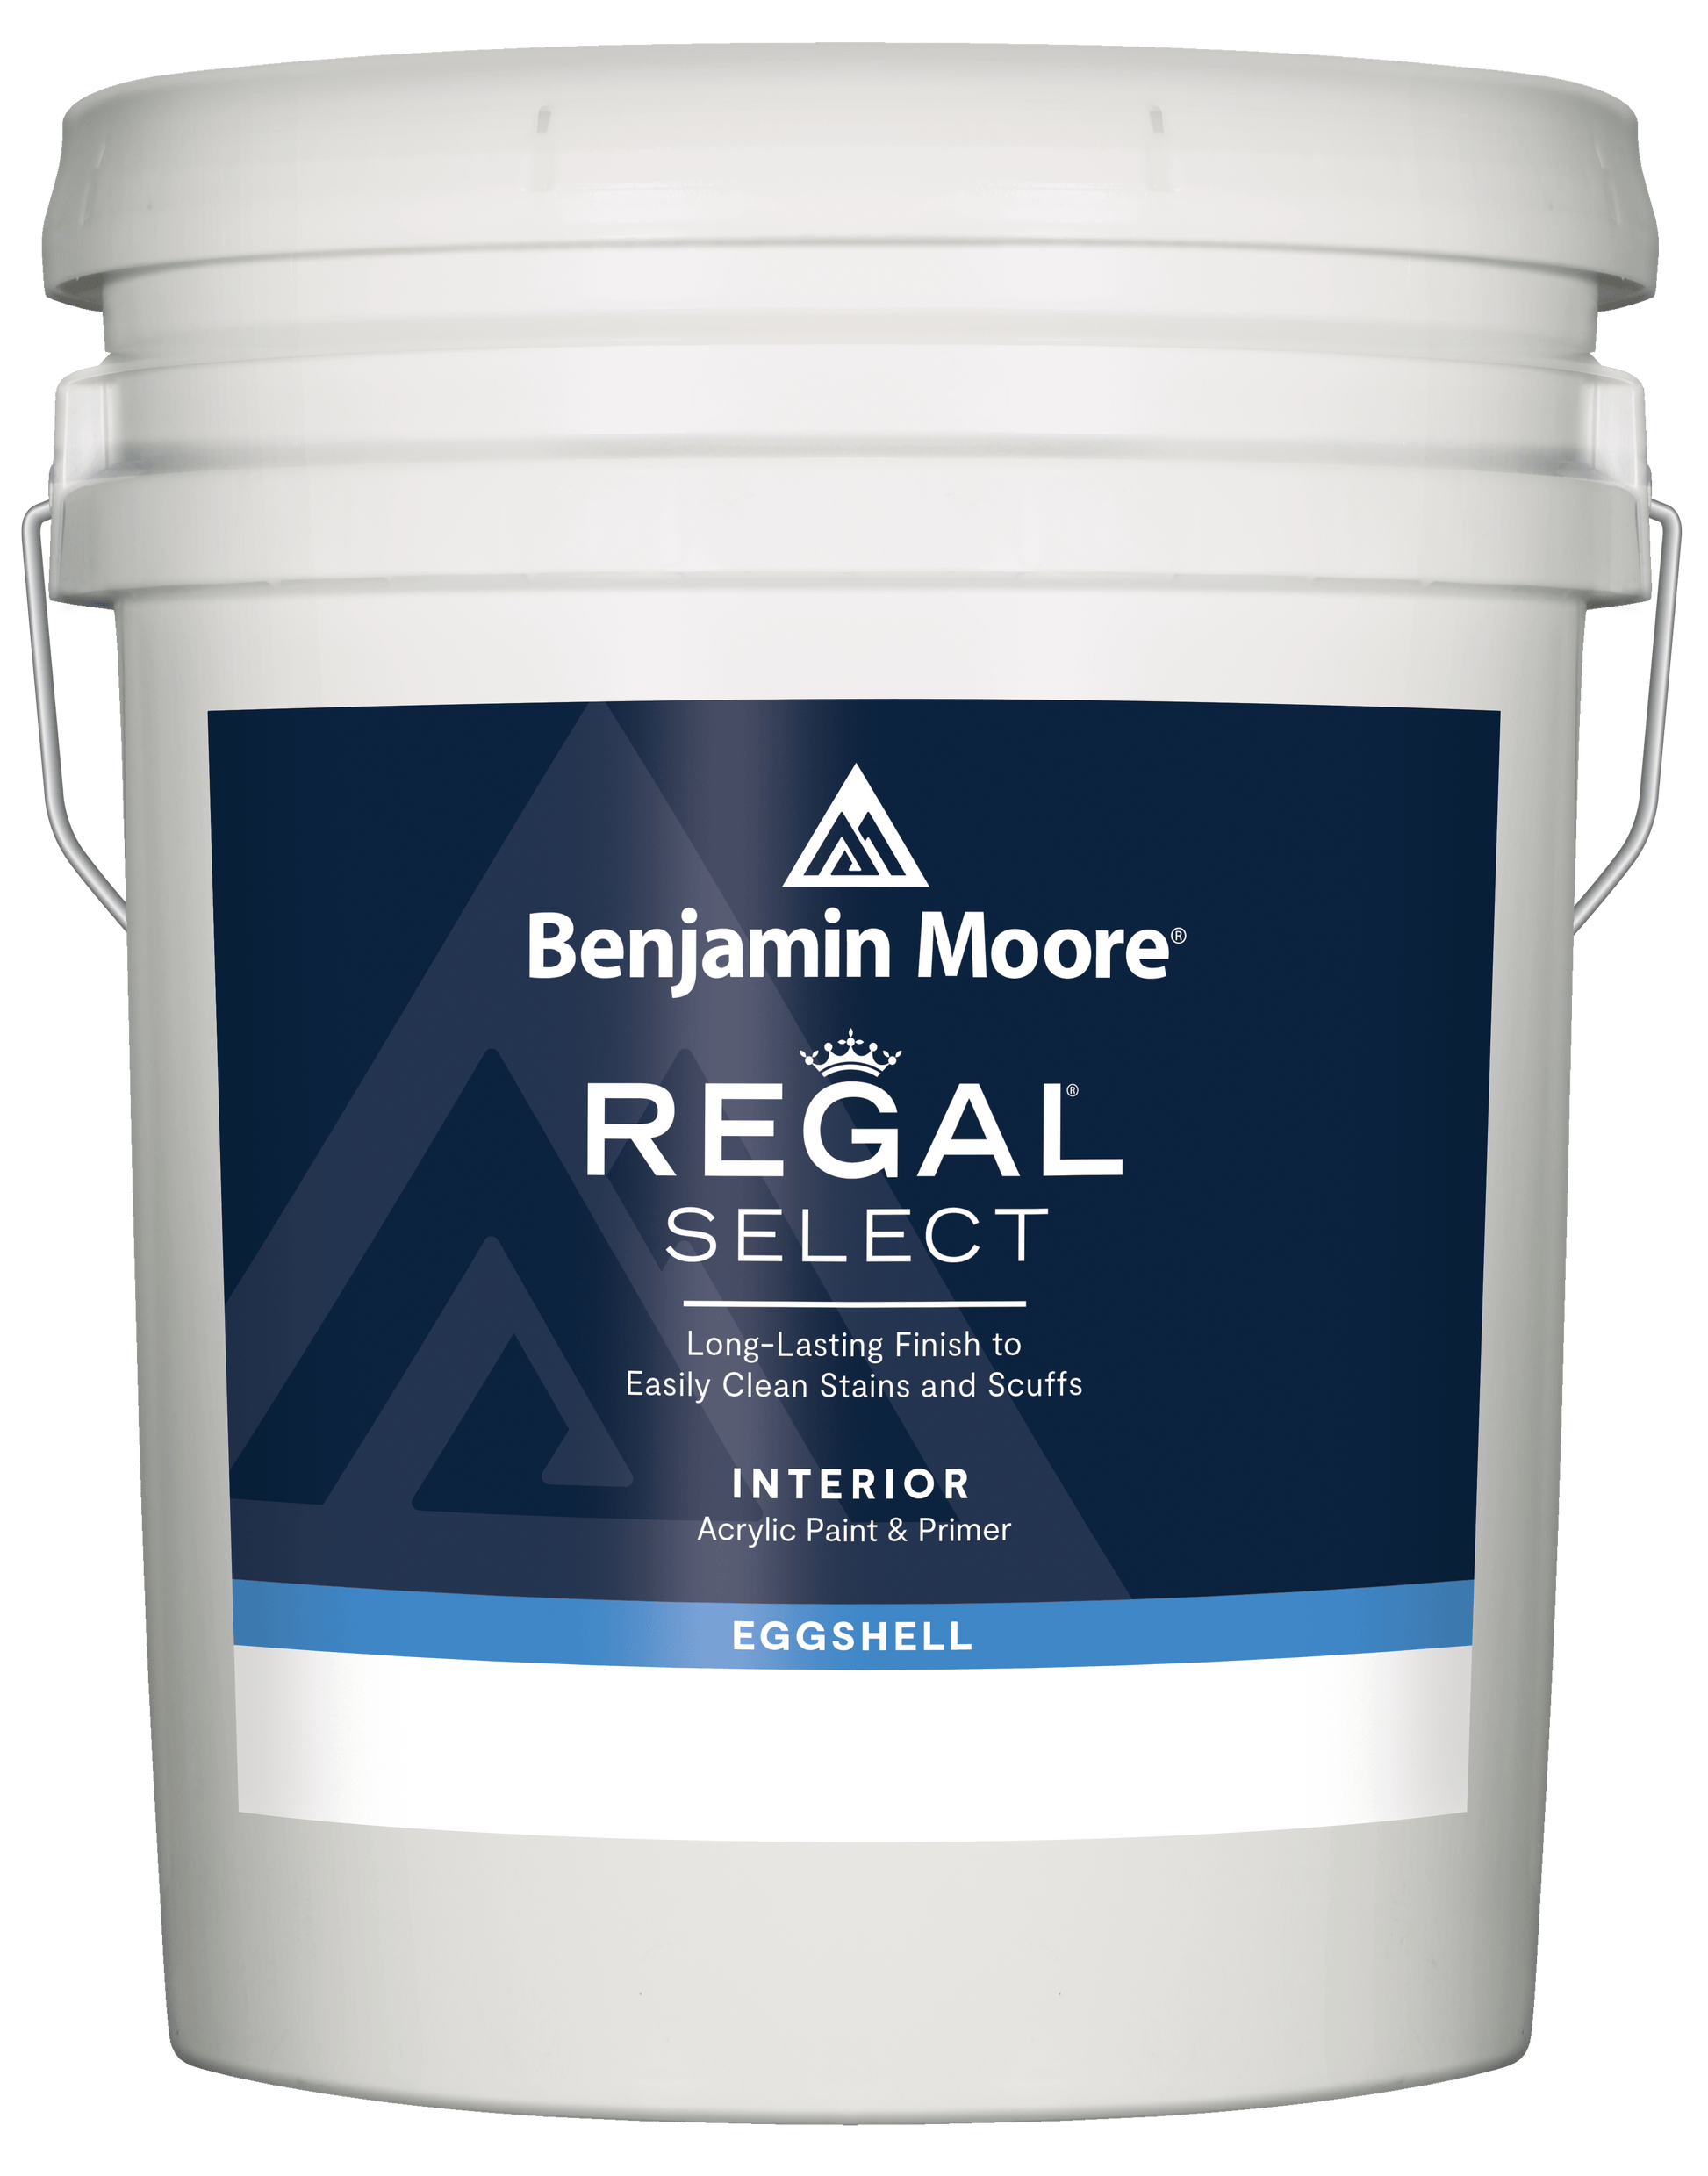 Benjamin Moore Regal Select - Rossi Paint Stores - Eggshell - 5 Gallon